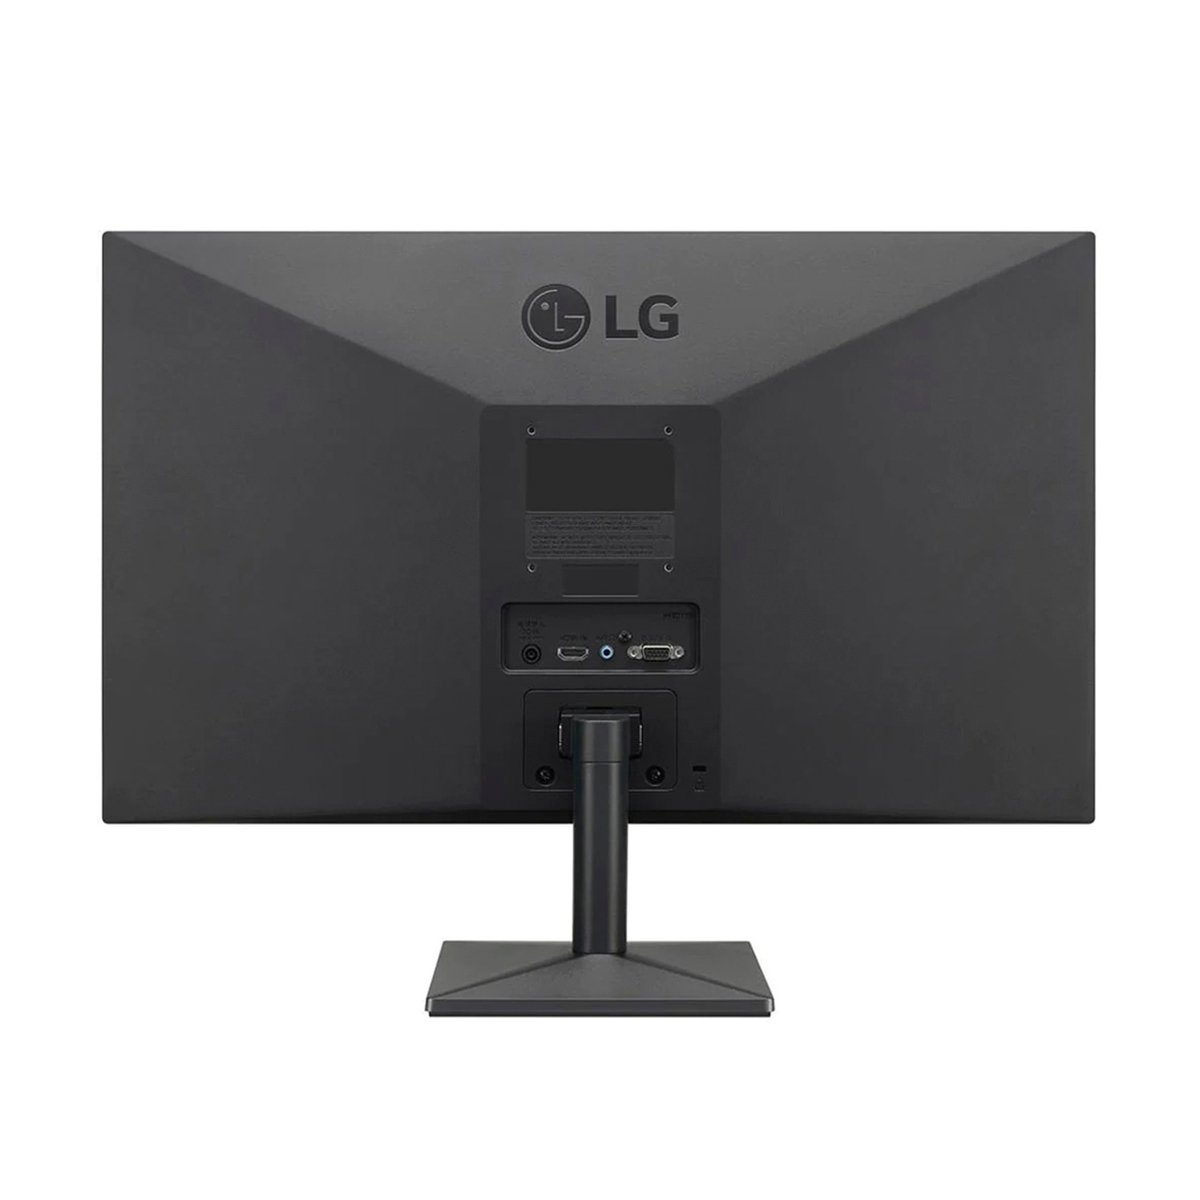 LG 22'' Class Full HD IPS LED Monitor with AMD FreeSync 22MK430H-B